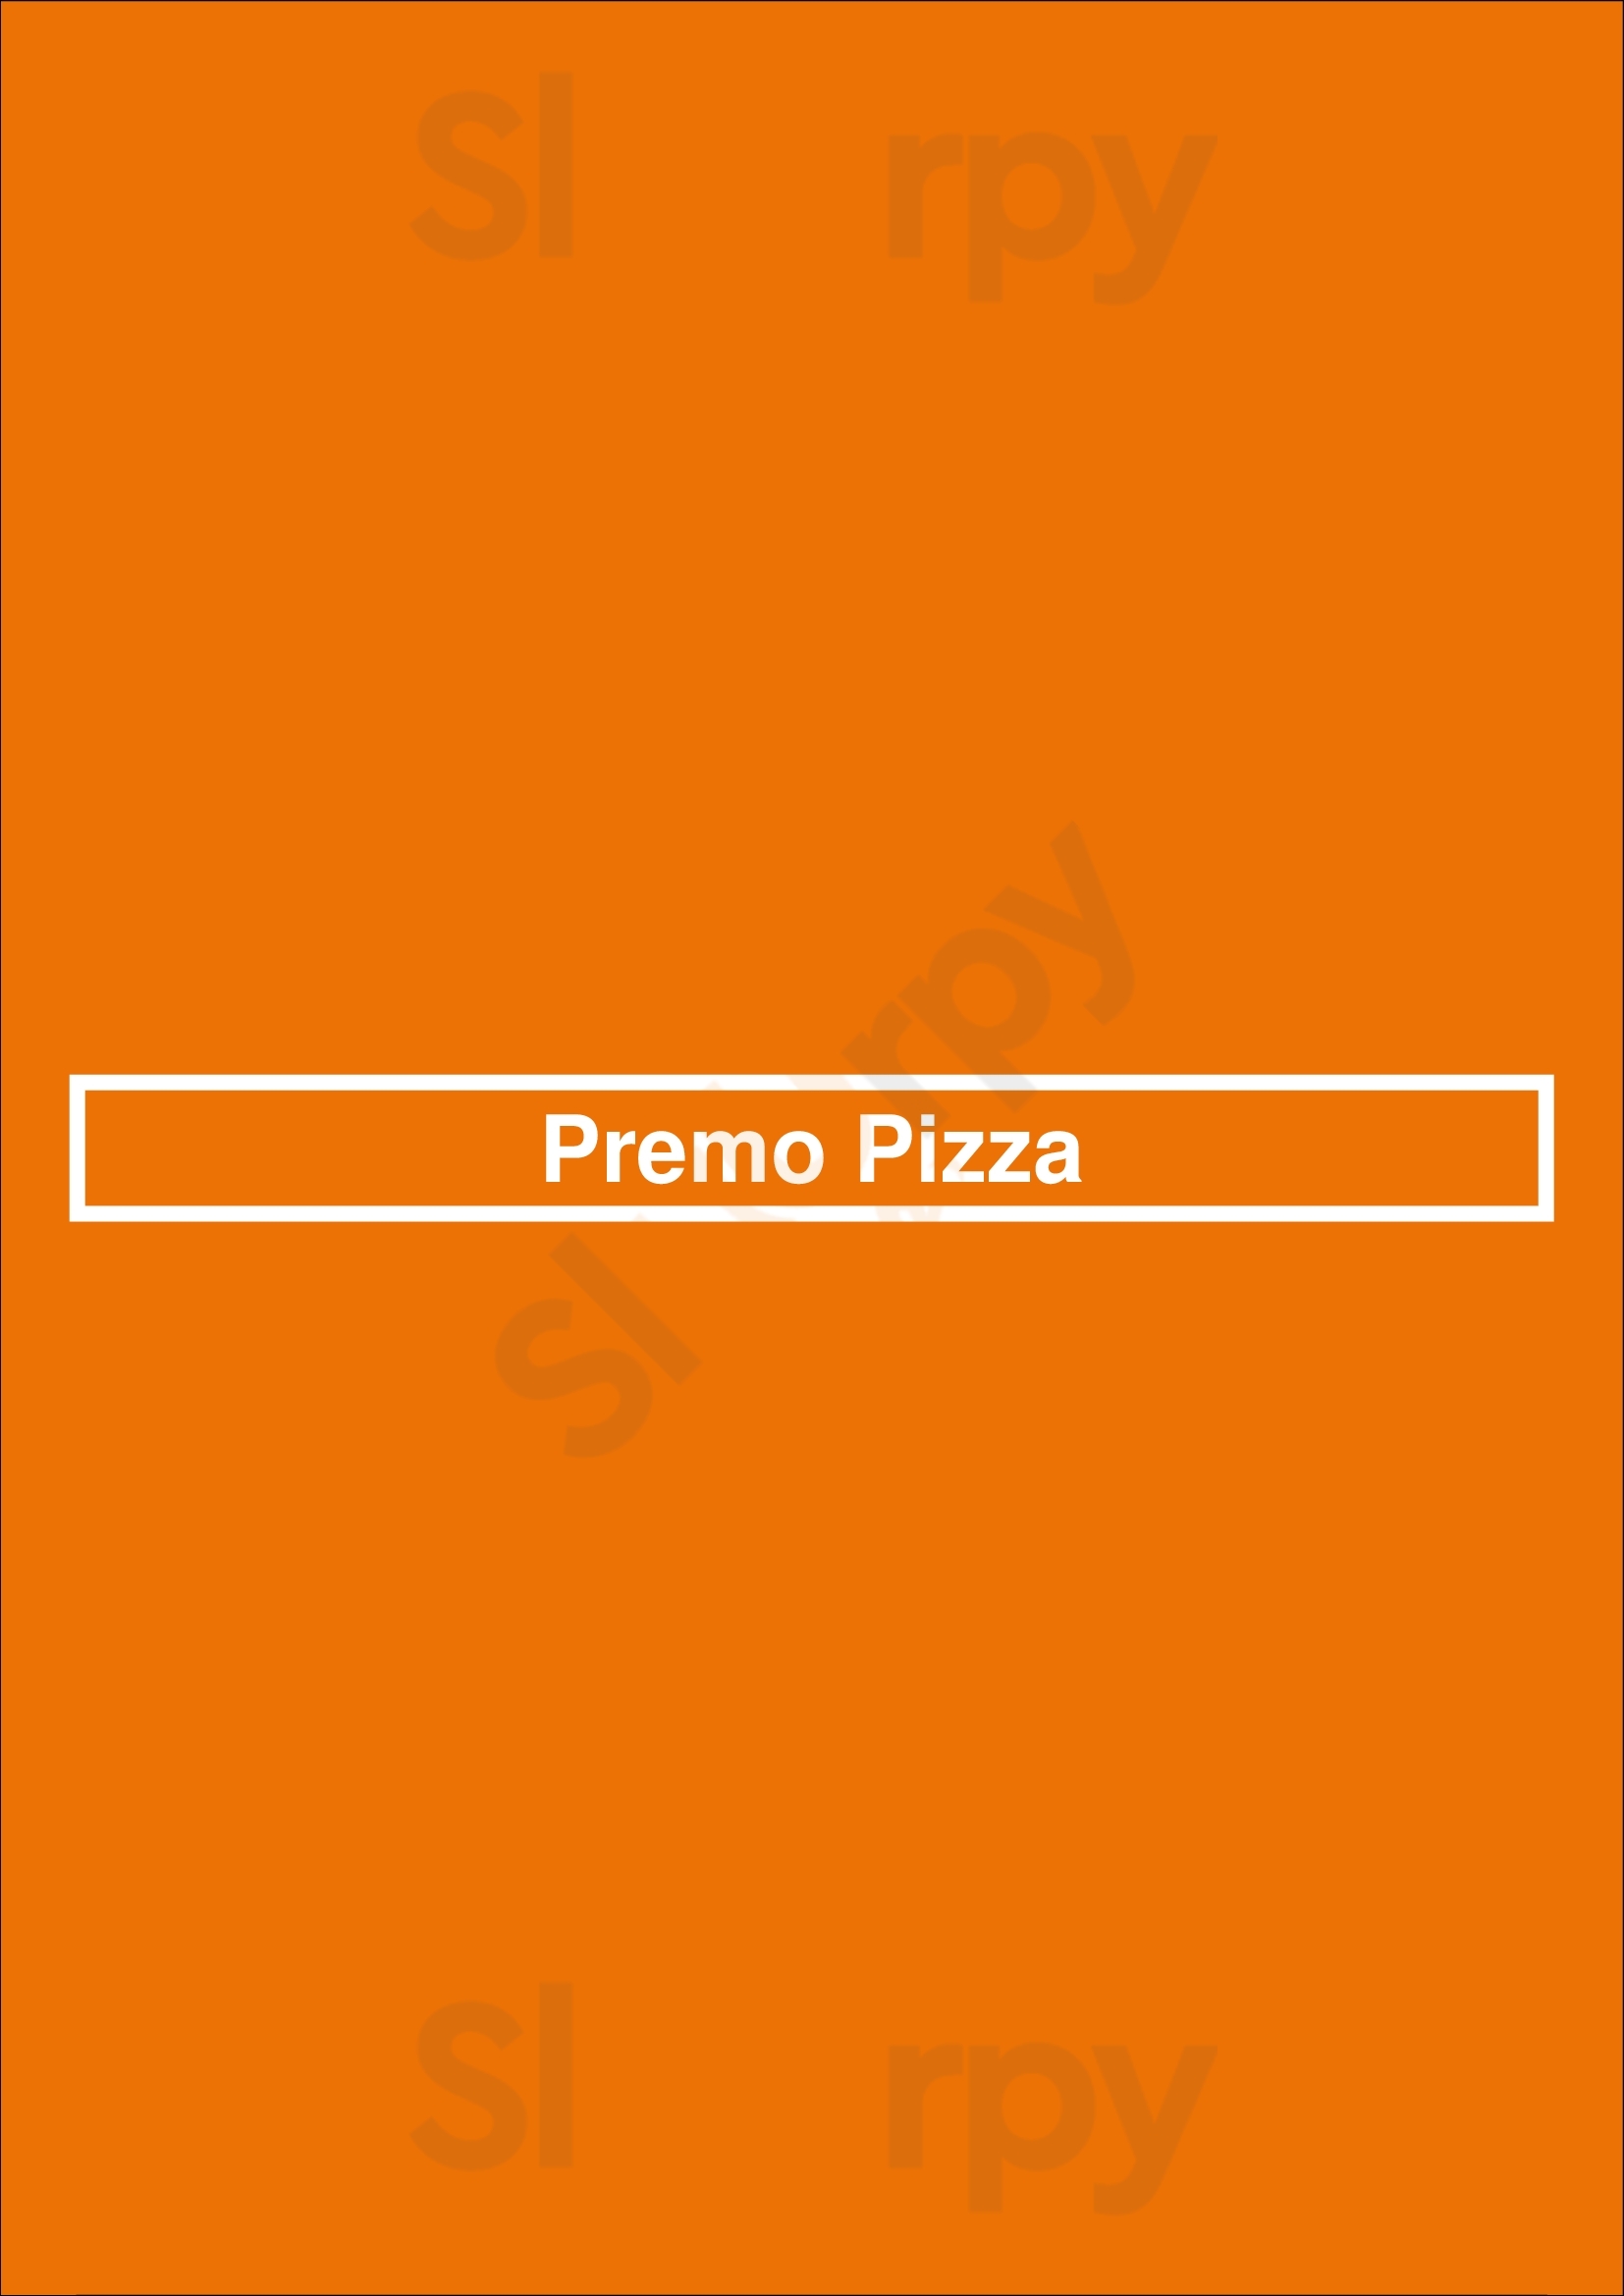 Premo Pizza Fresno Menu - 1